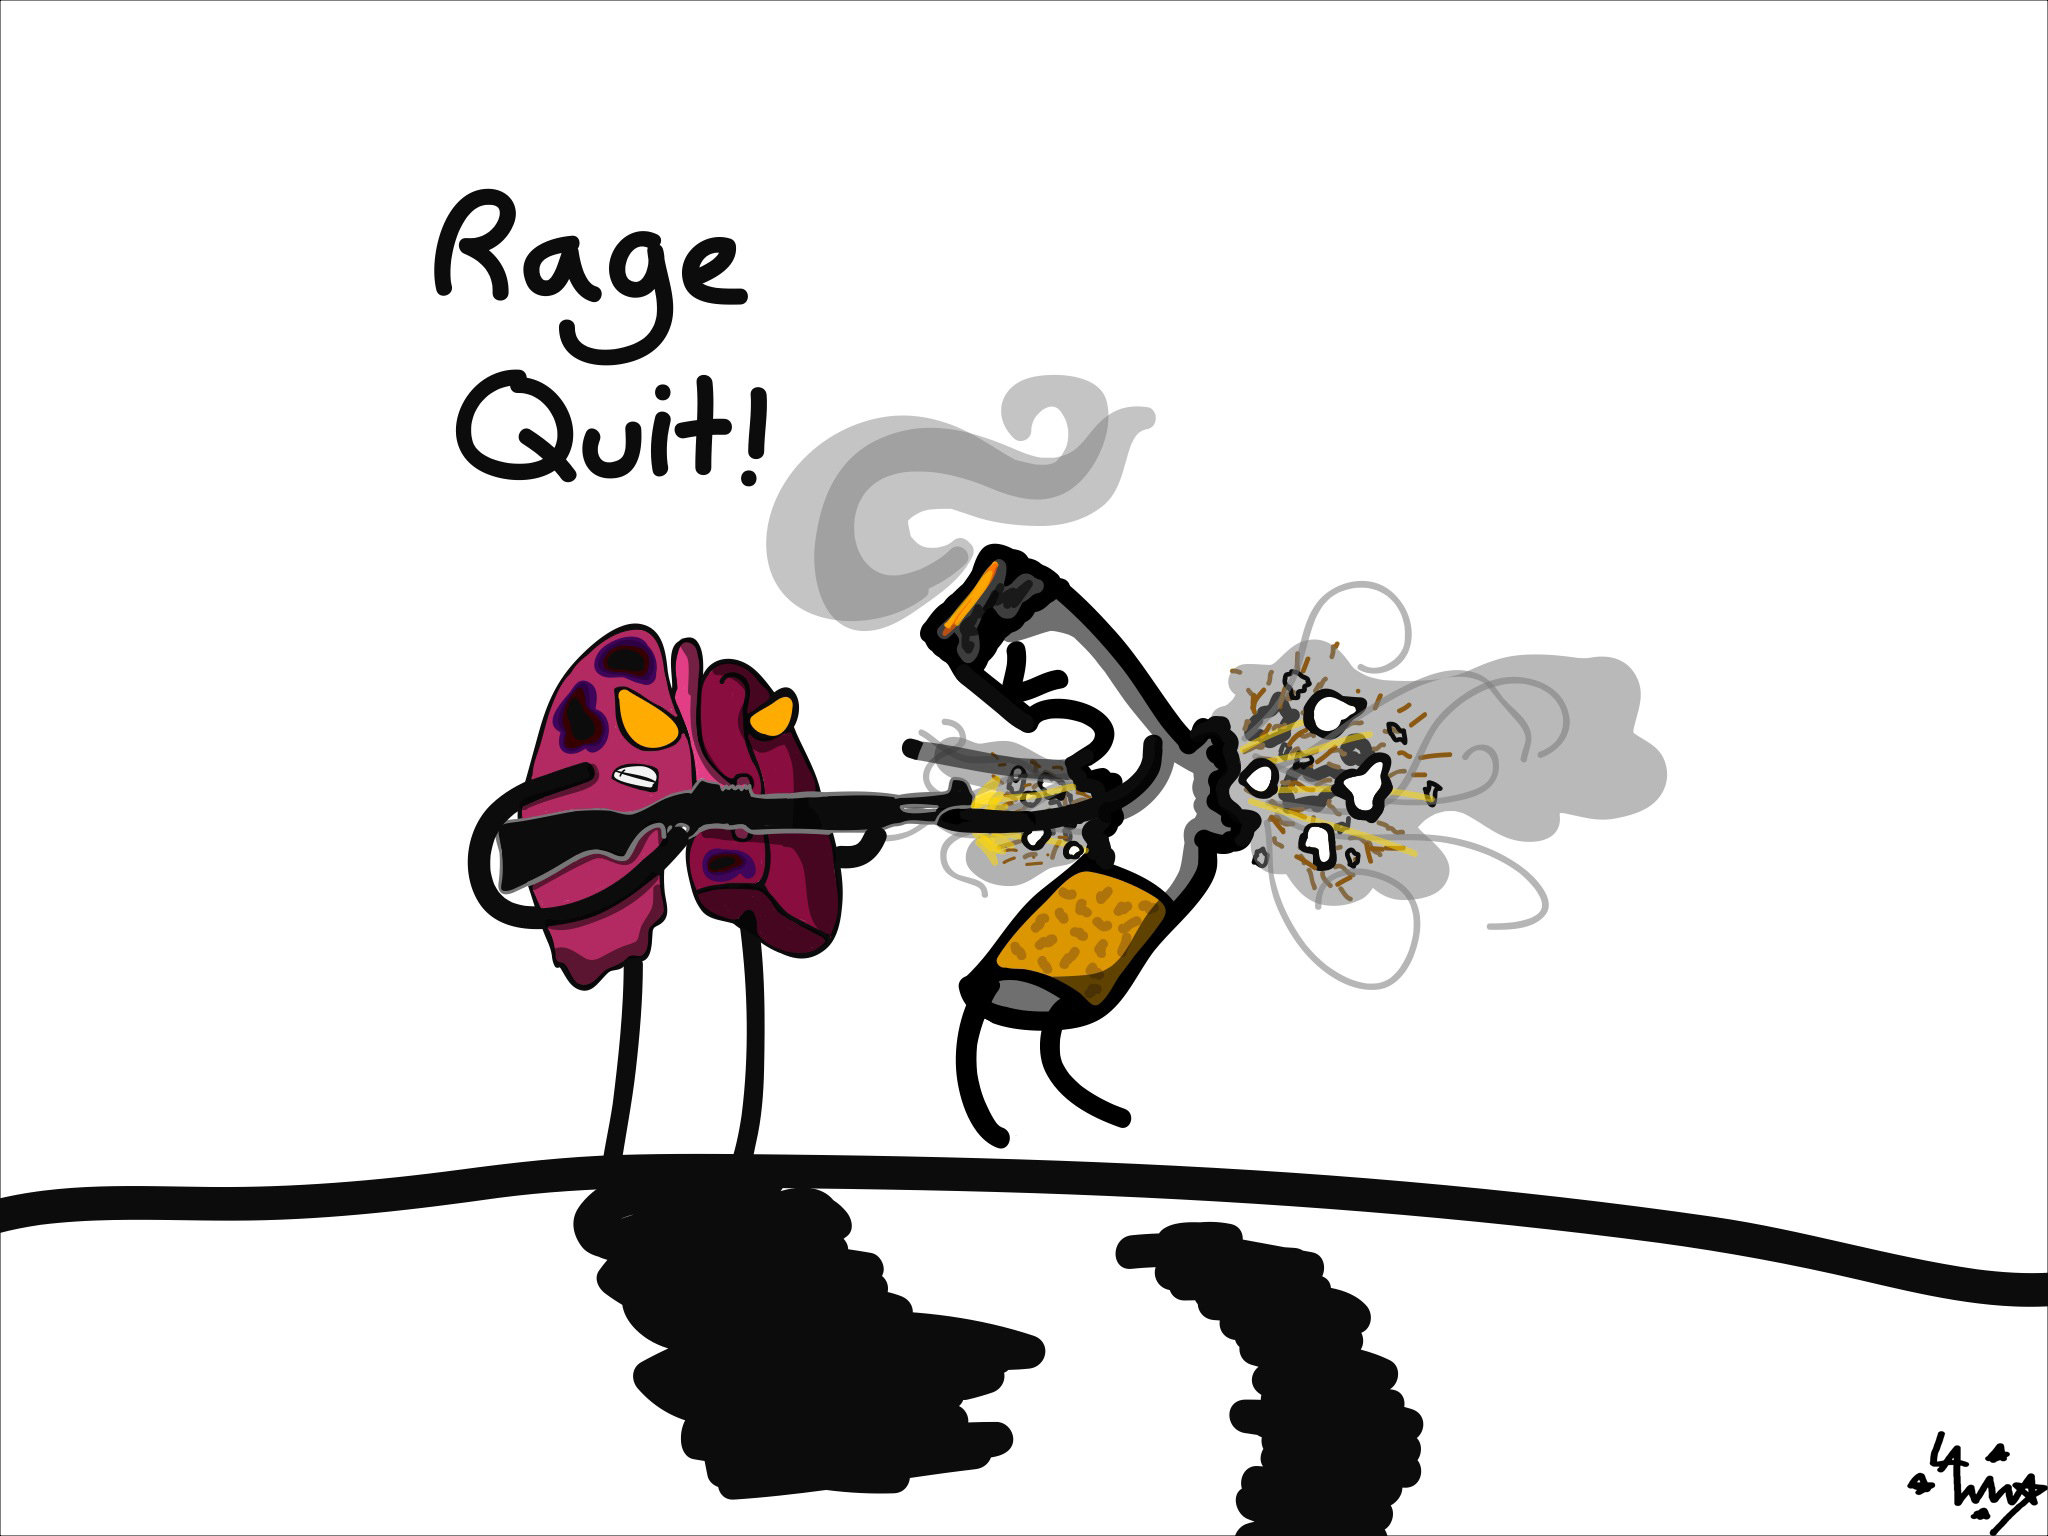 Rage Quit by Scott Cawthon